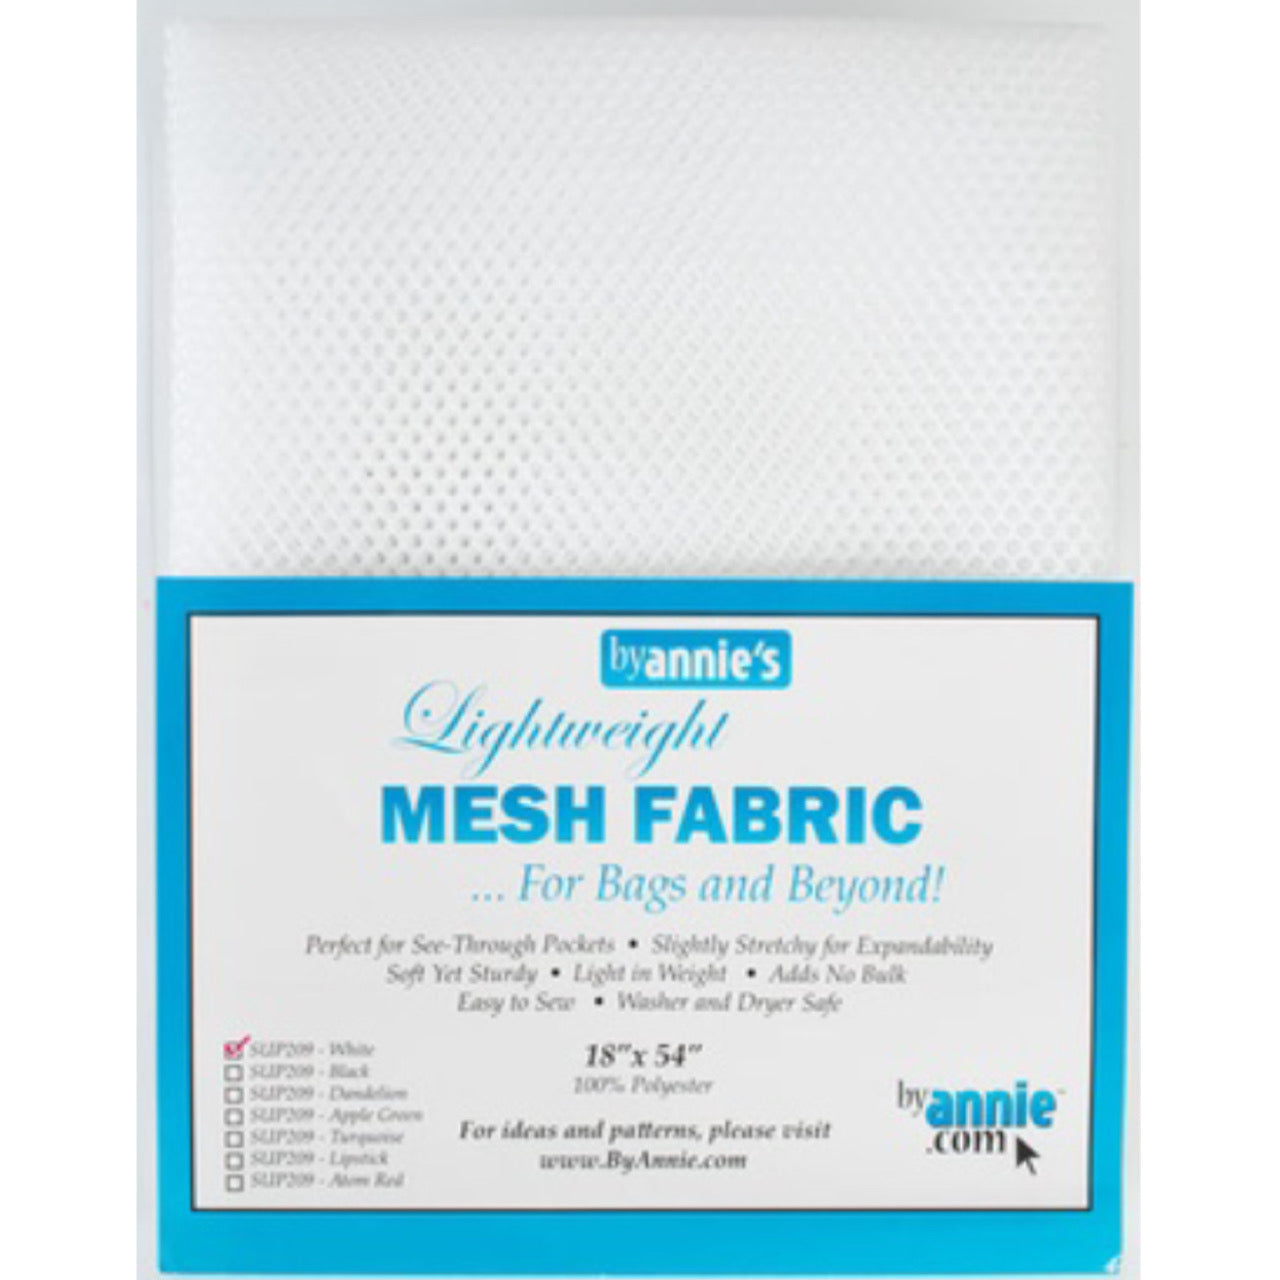 ByAnnie Mesh Fabric - 18”x54” - White